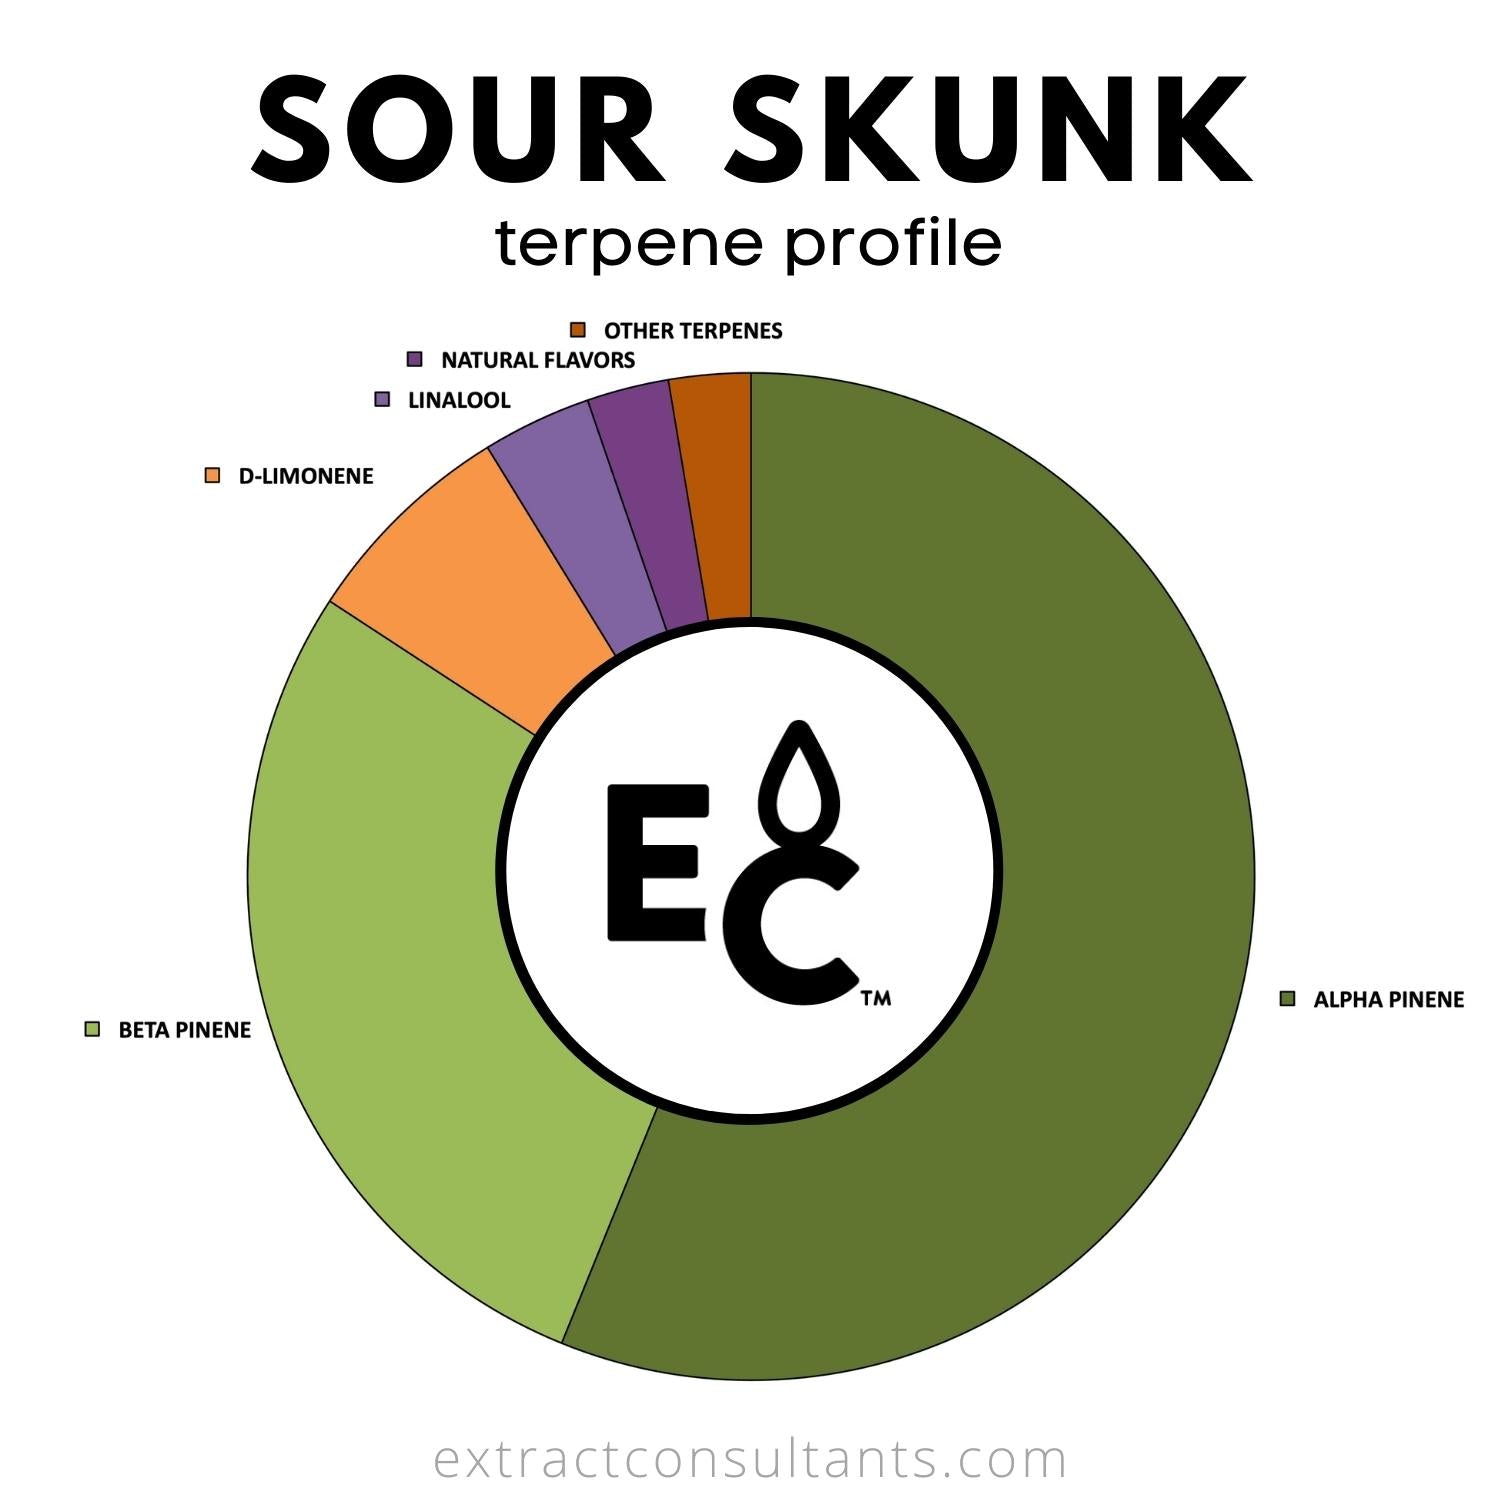 Sour Skunk terpene profile chart